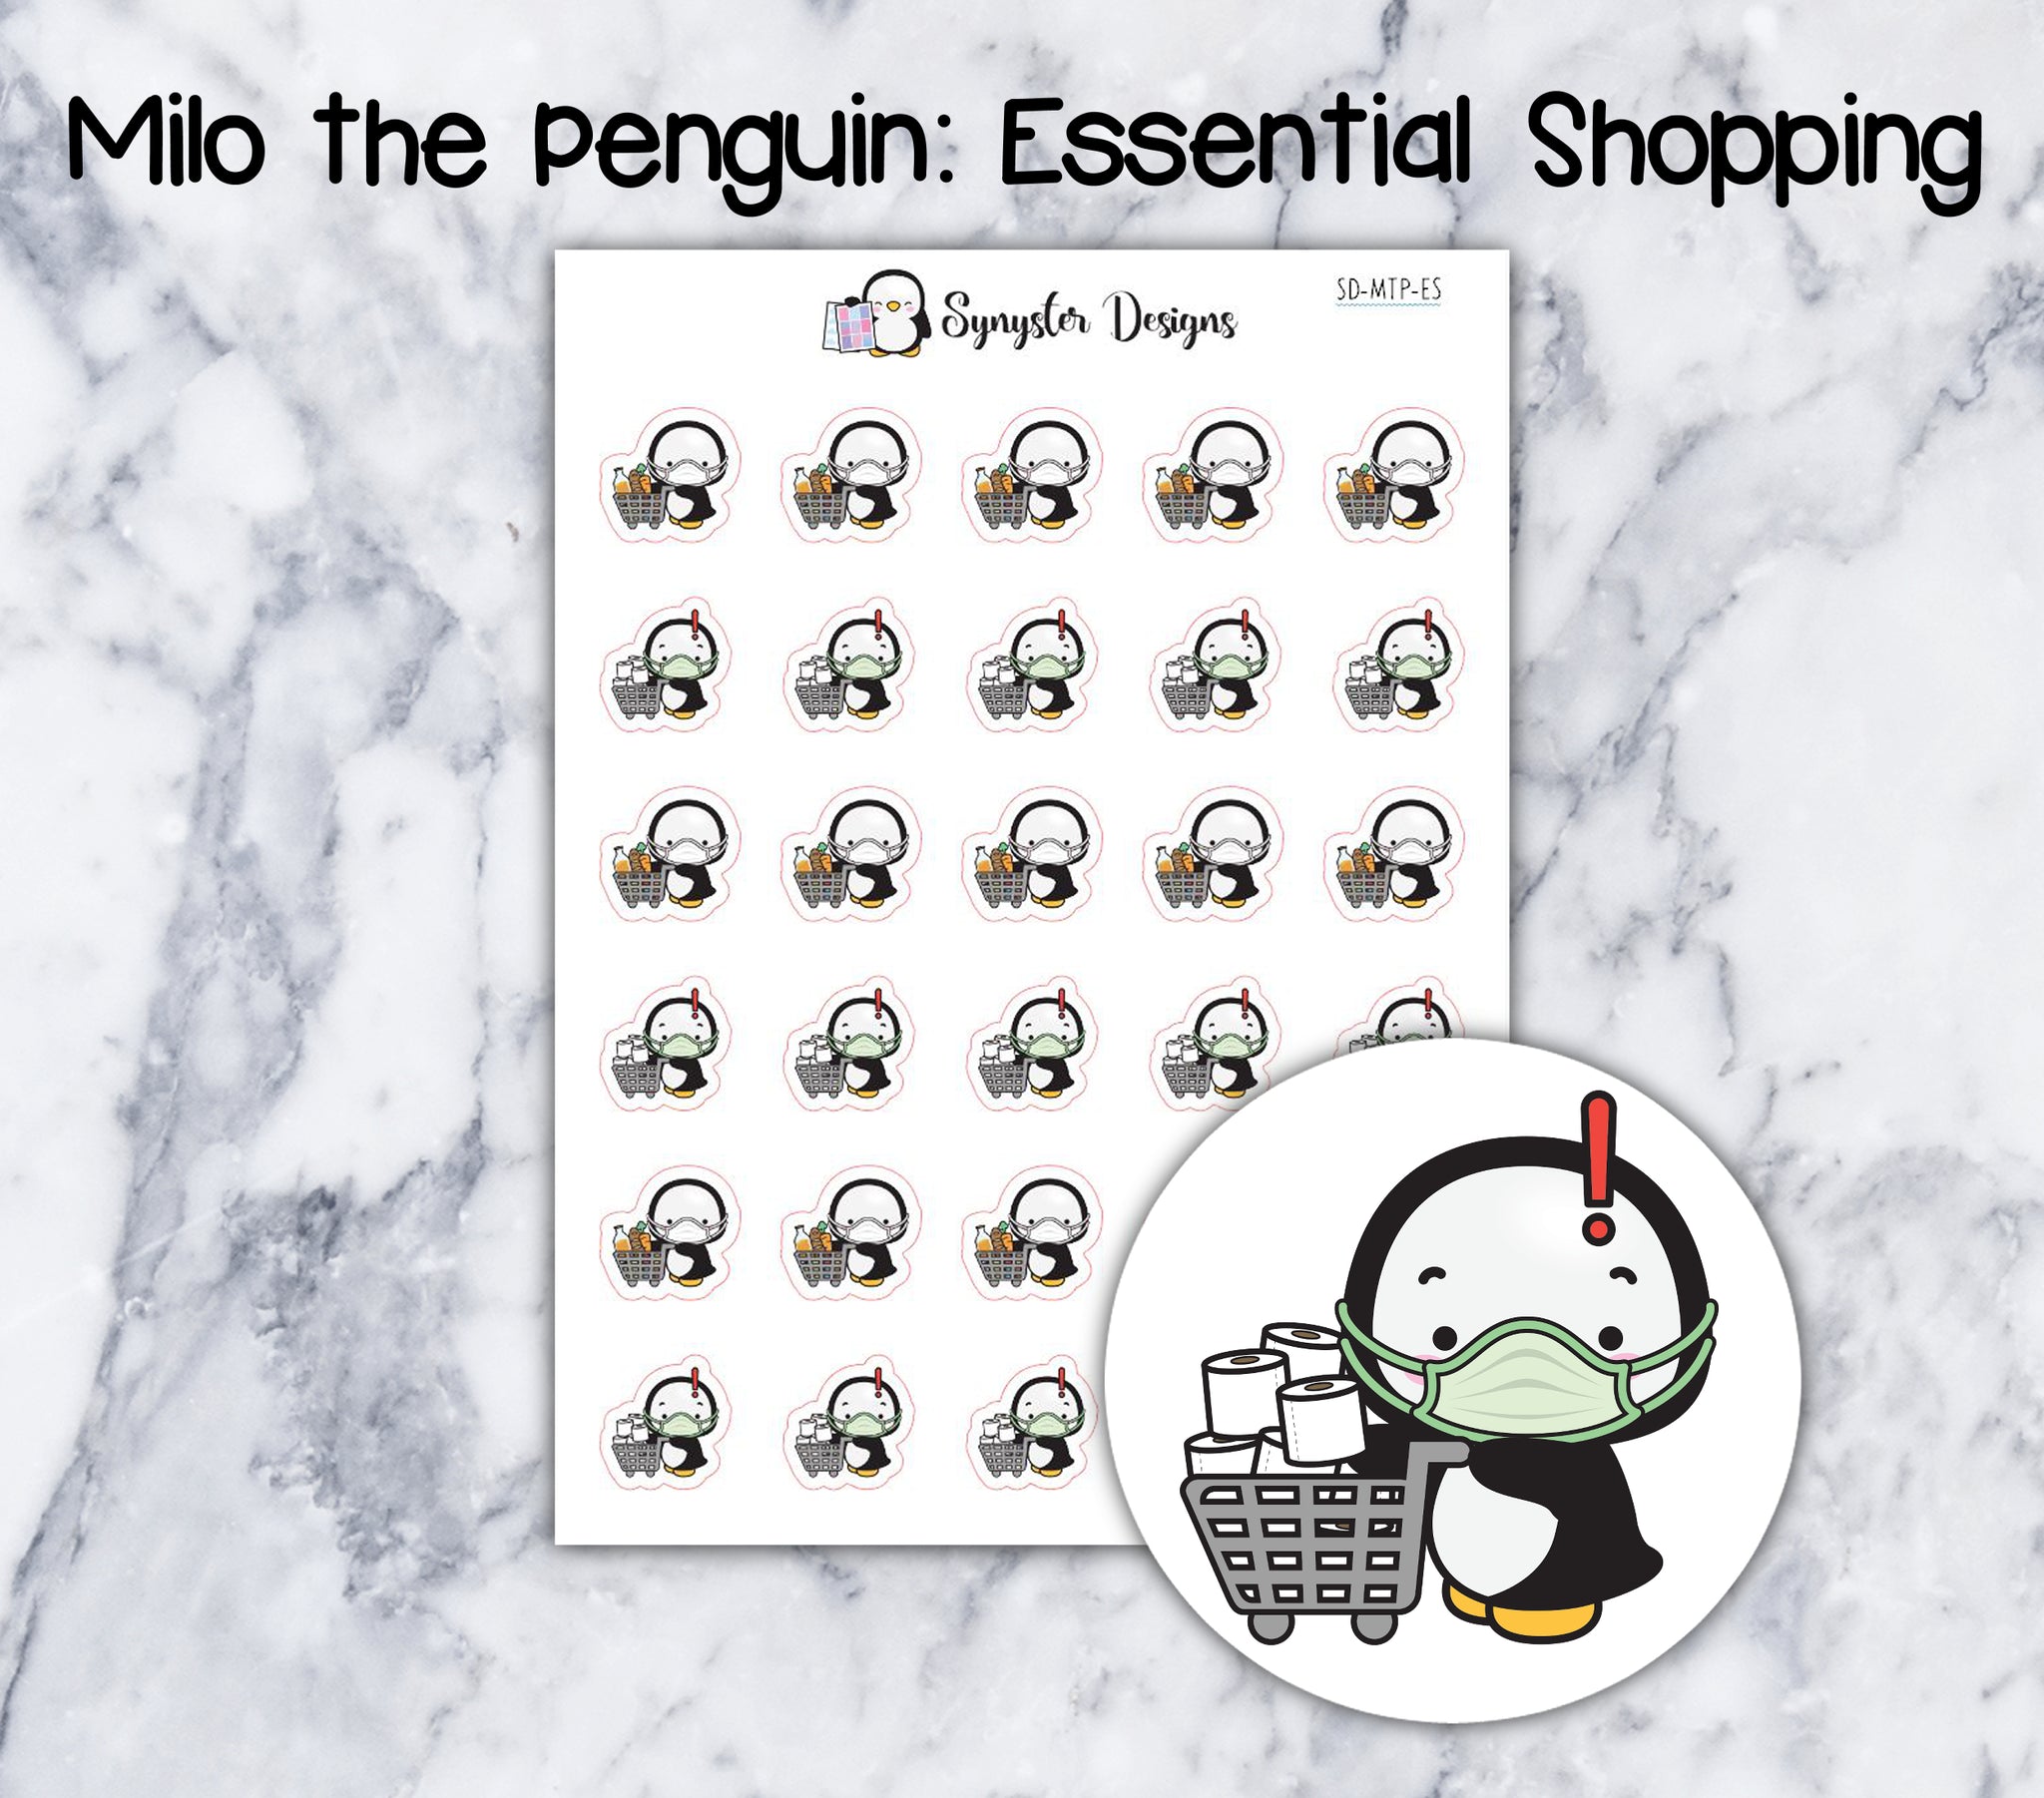 Essential Shopping Milo the Penguin